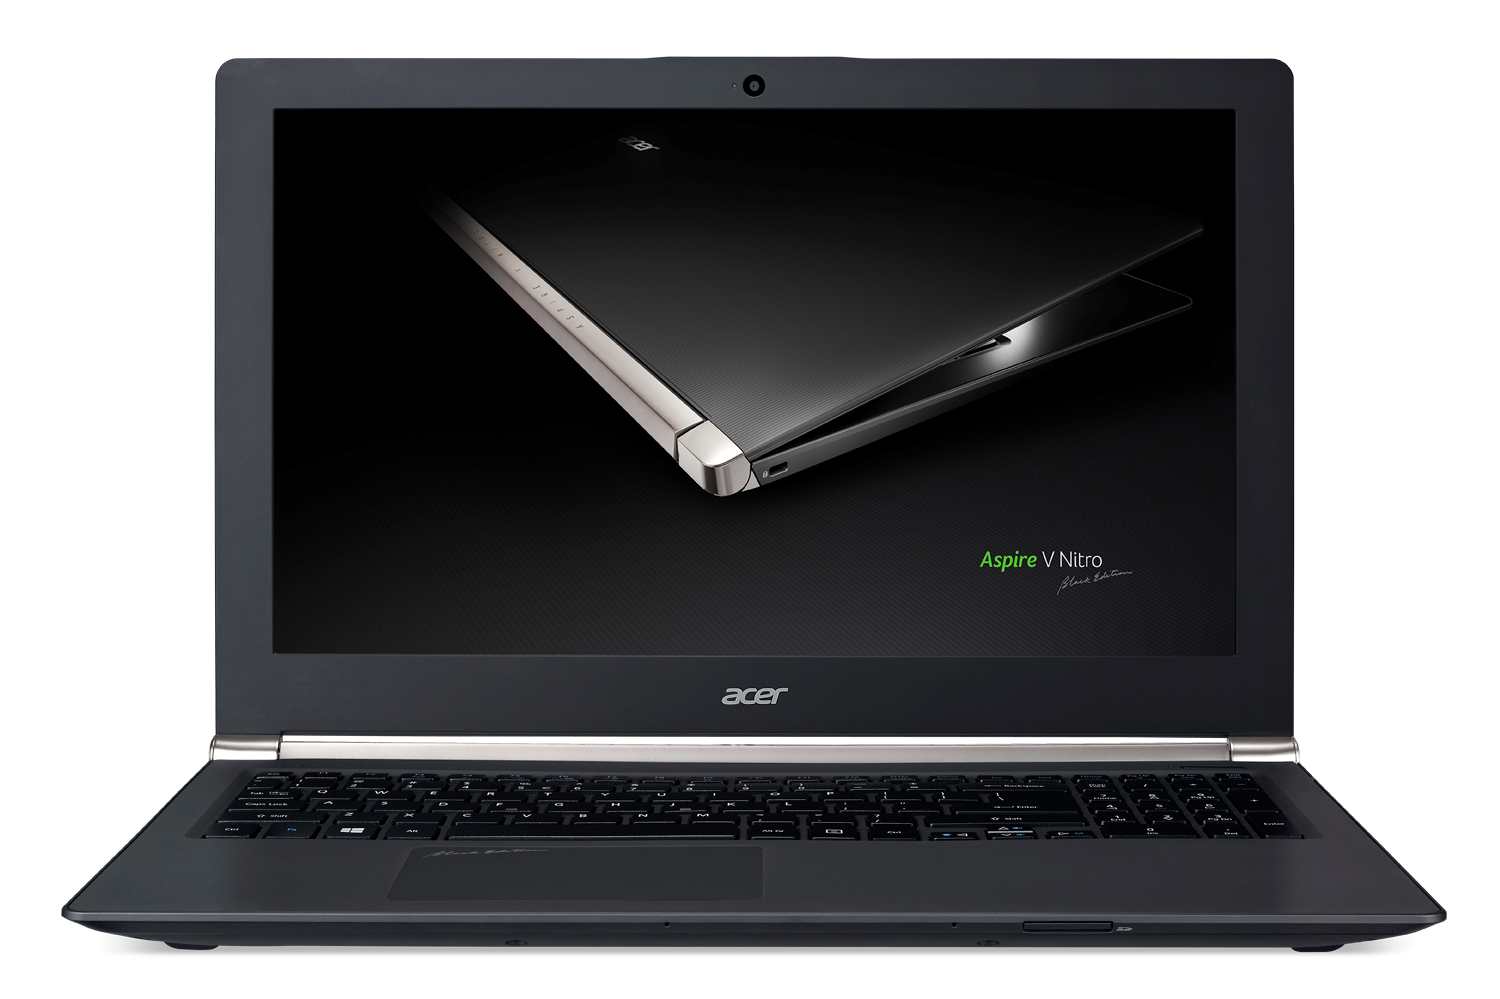 Aspire nitro. Acer v Nitro Black Edition. Acer Nitro v15. Acer Nitro 5 Black Edition. Acer Aspire v15 Nitro Black Edition.